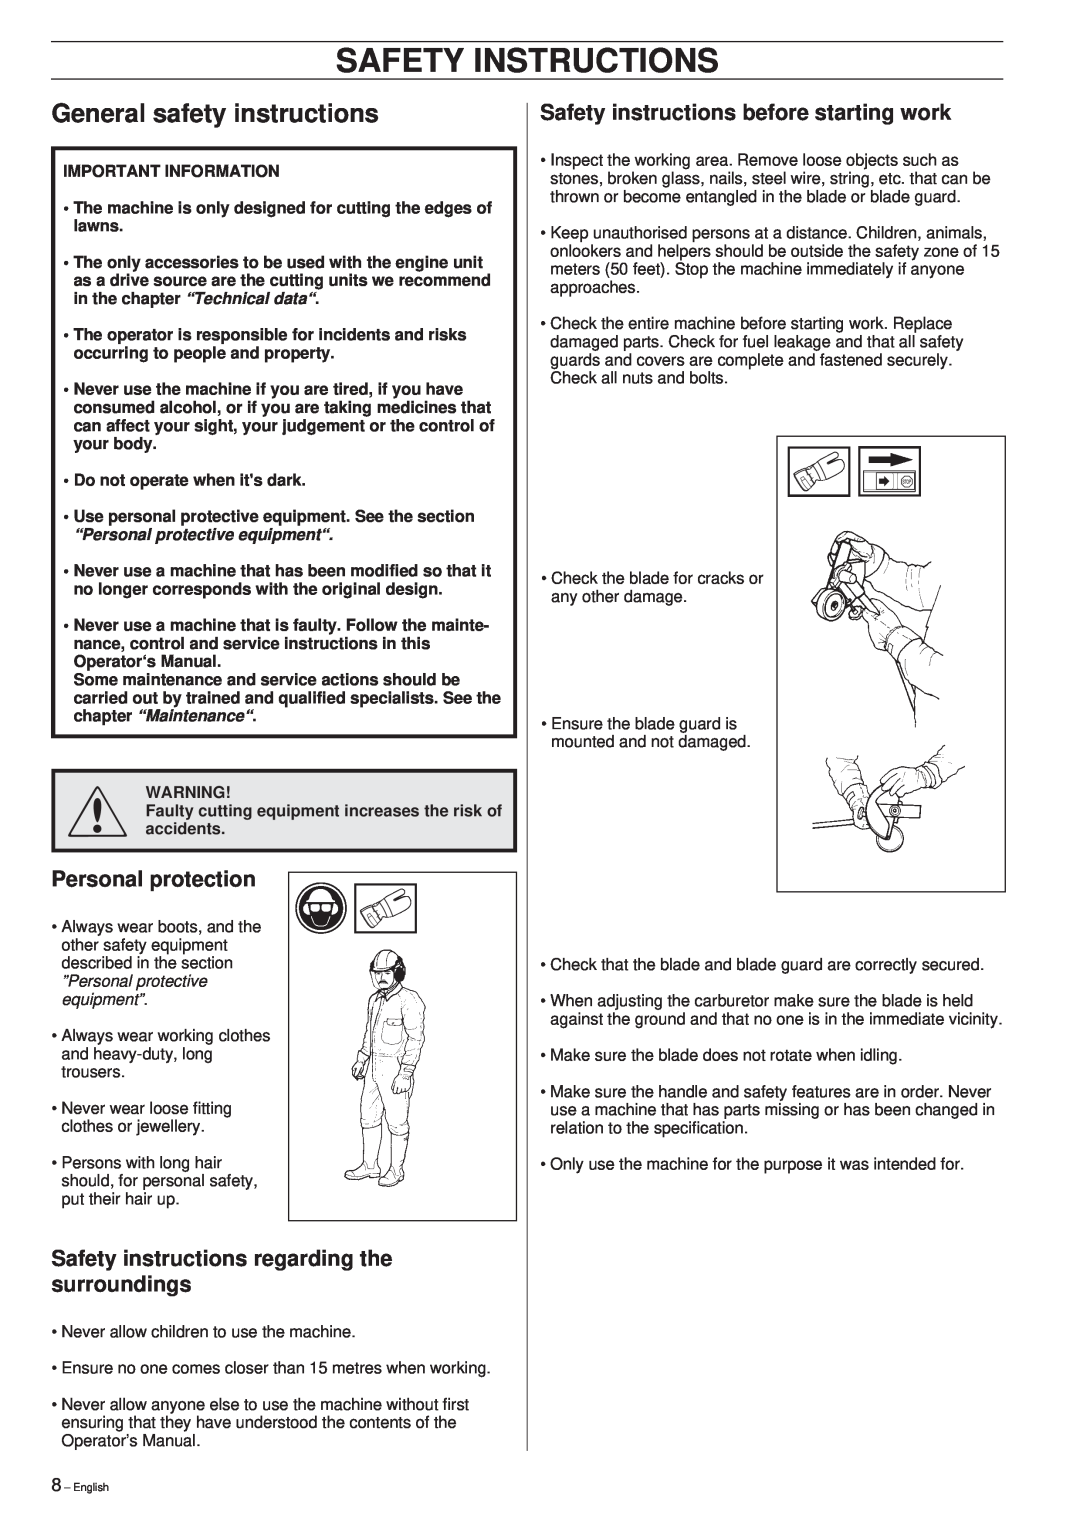 Husqvarna 225E manual General safety instructions, Safety Instructions, Personal protection 